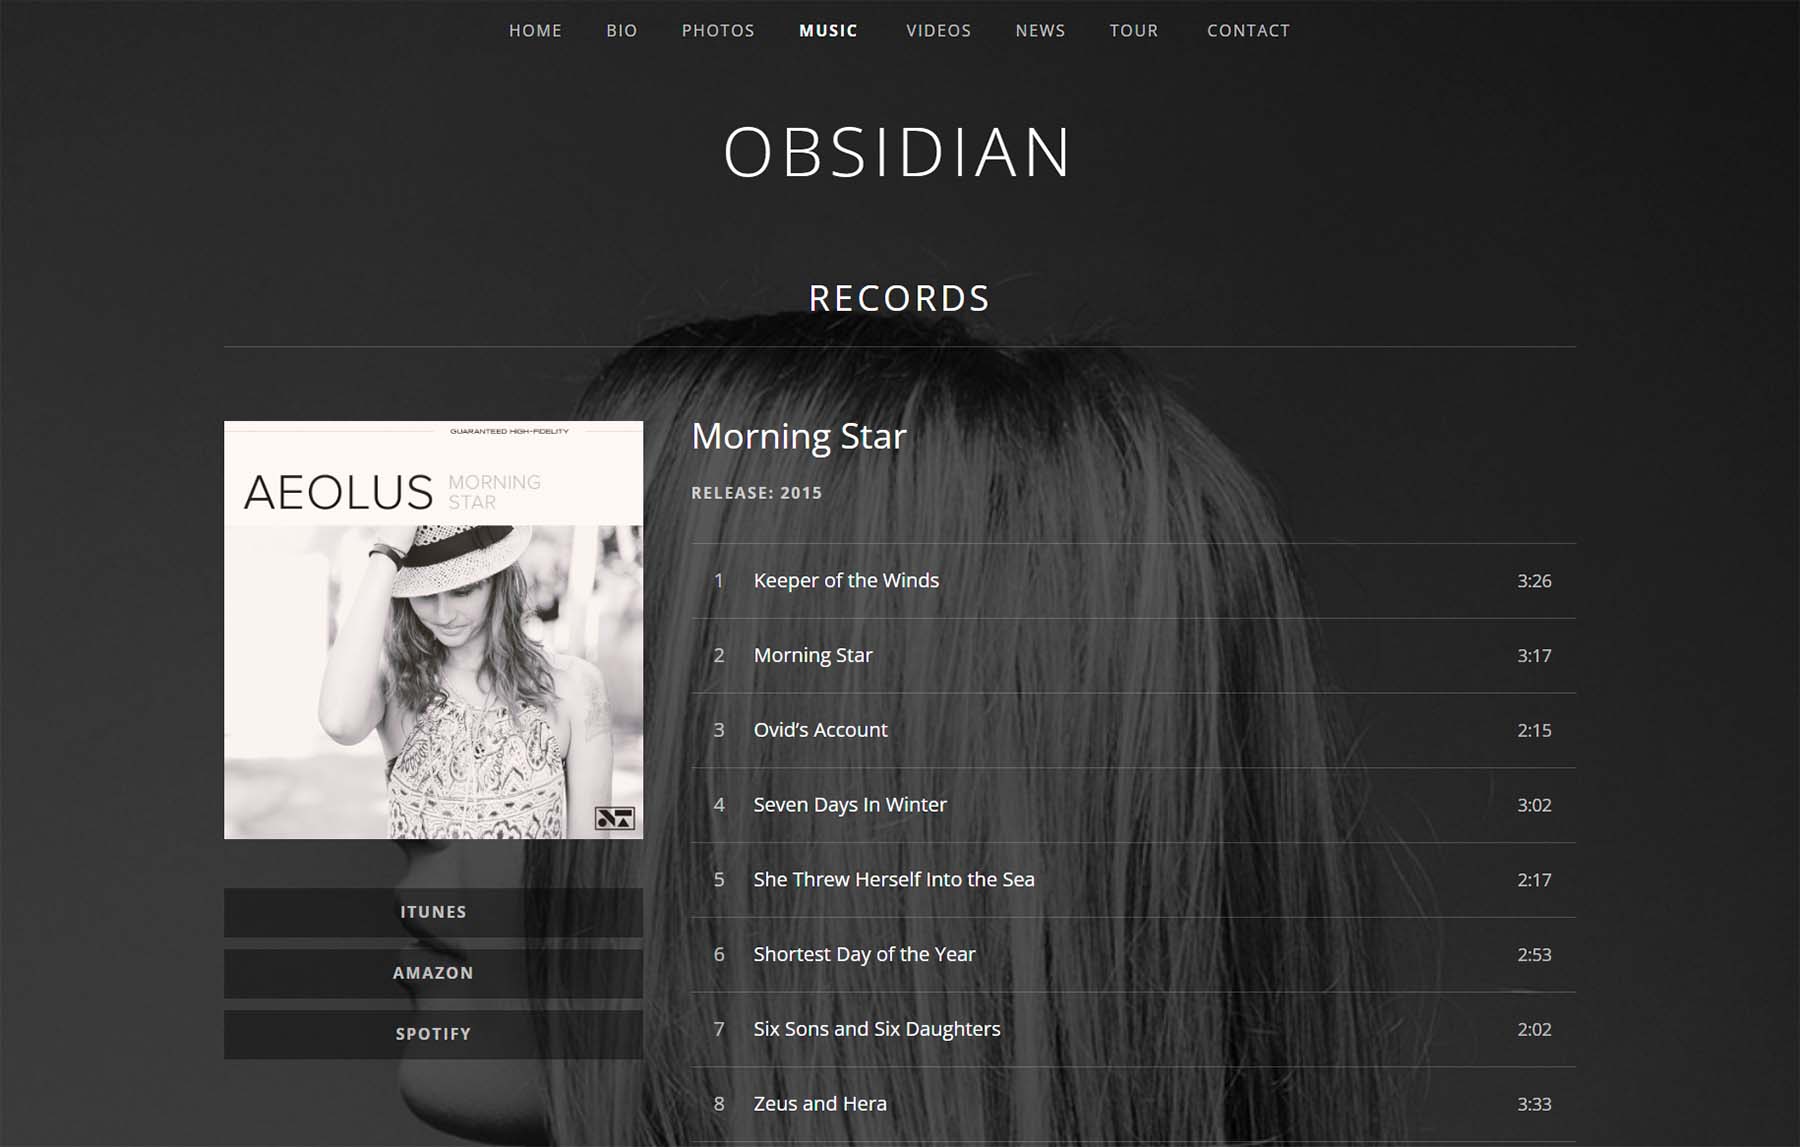 Obisian's album playlist feature